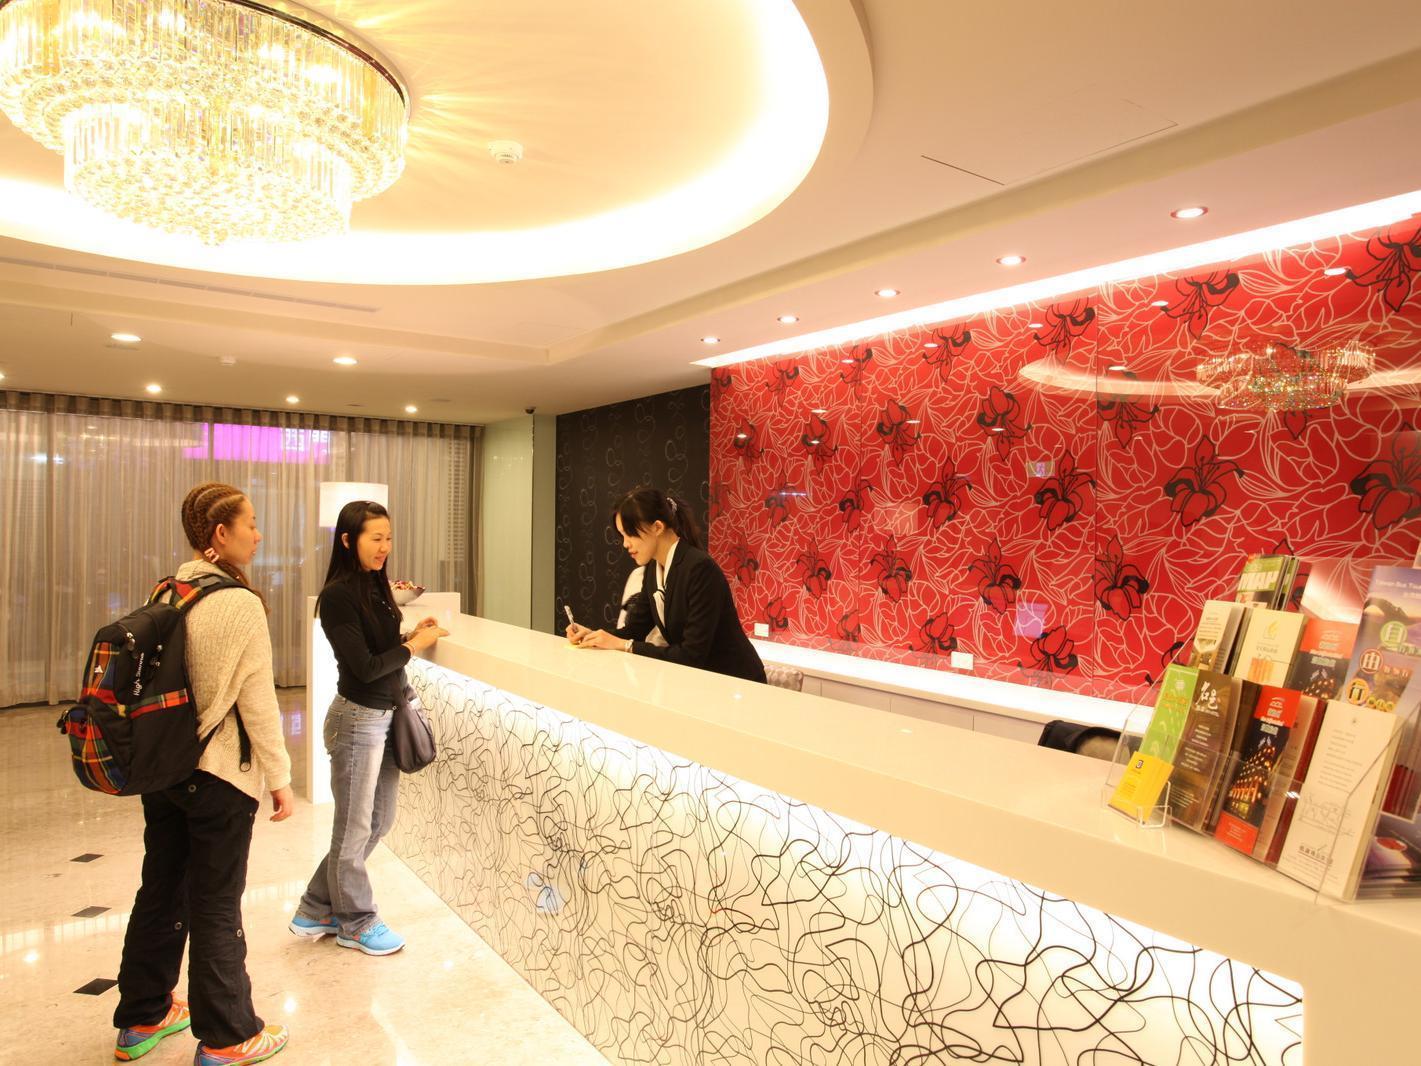 Ximen Citizen Hotel Taipei Eksteriør billede